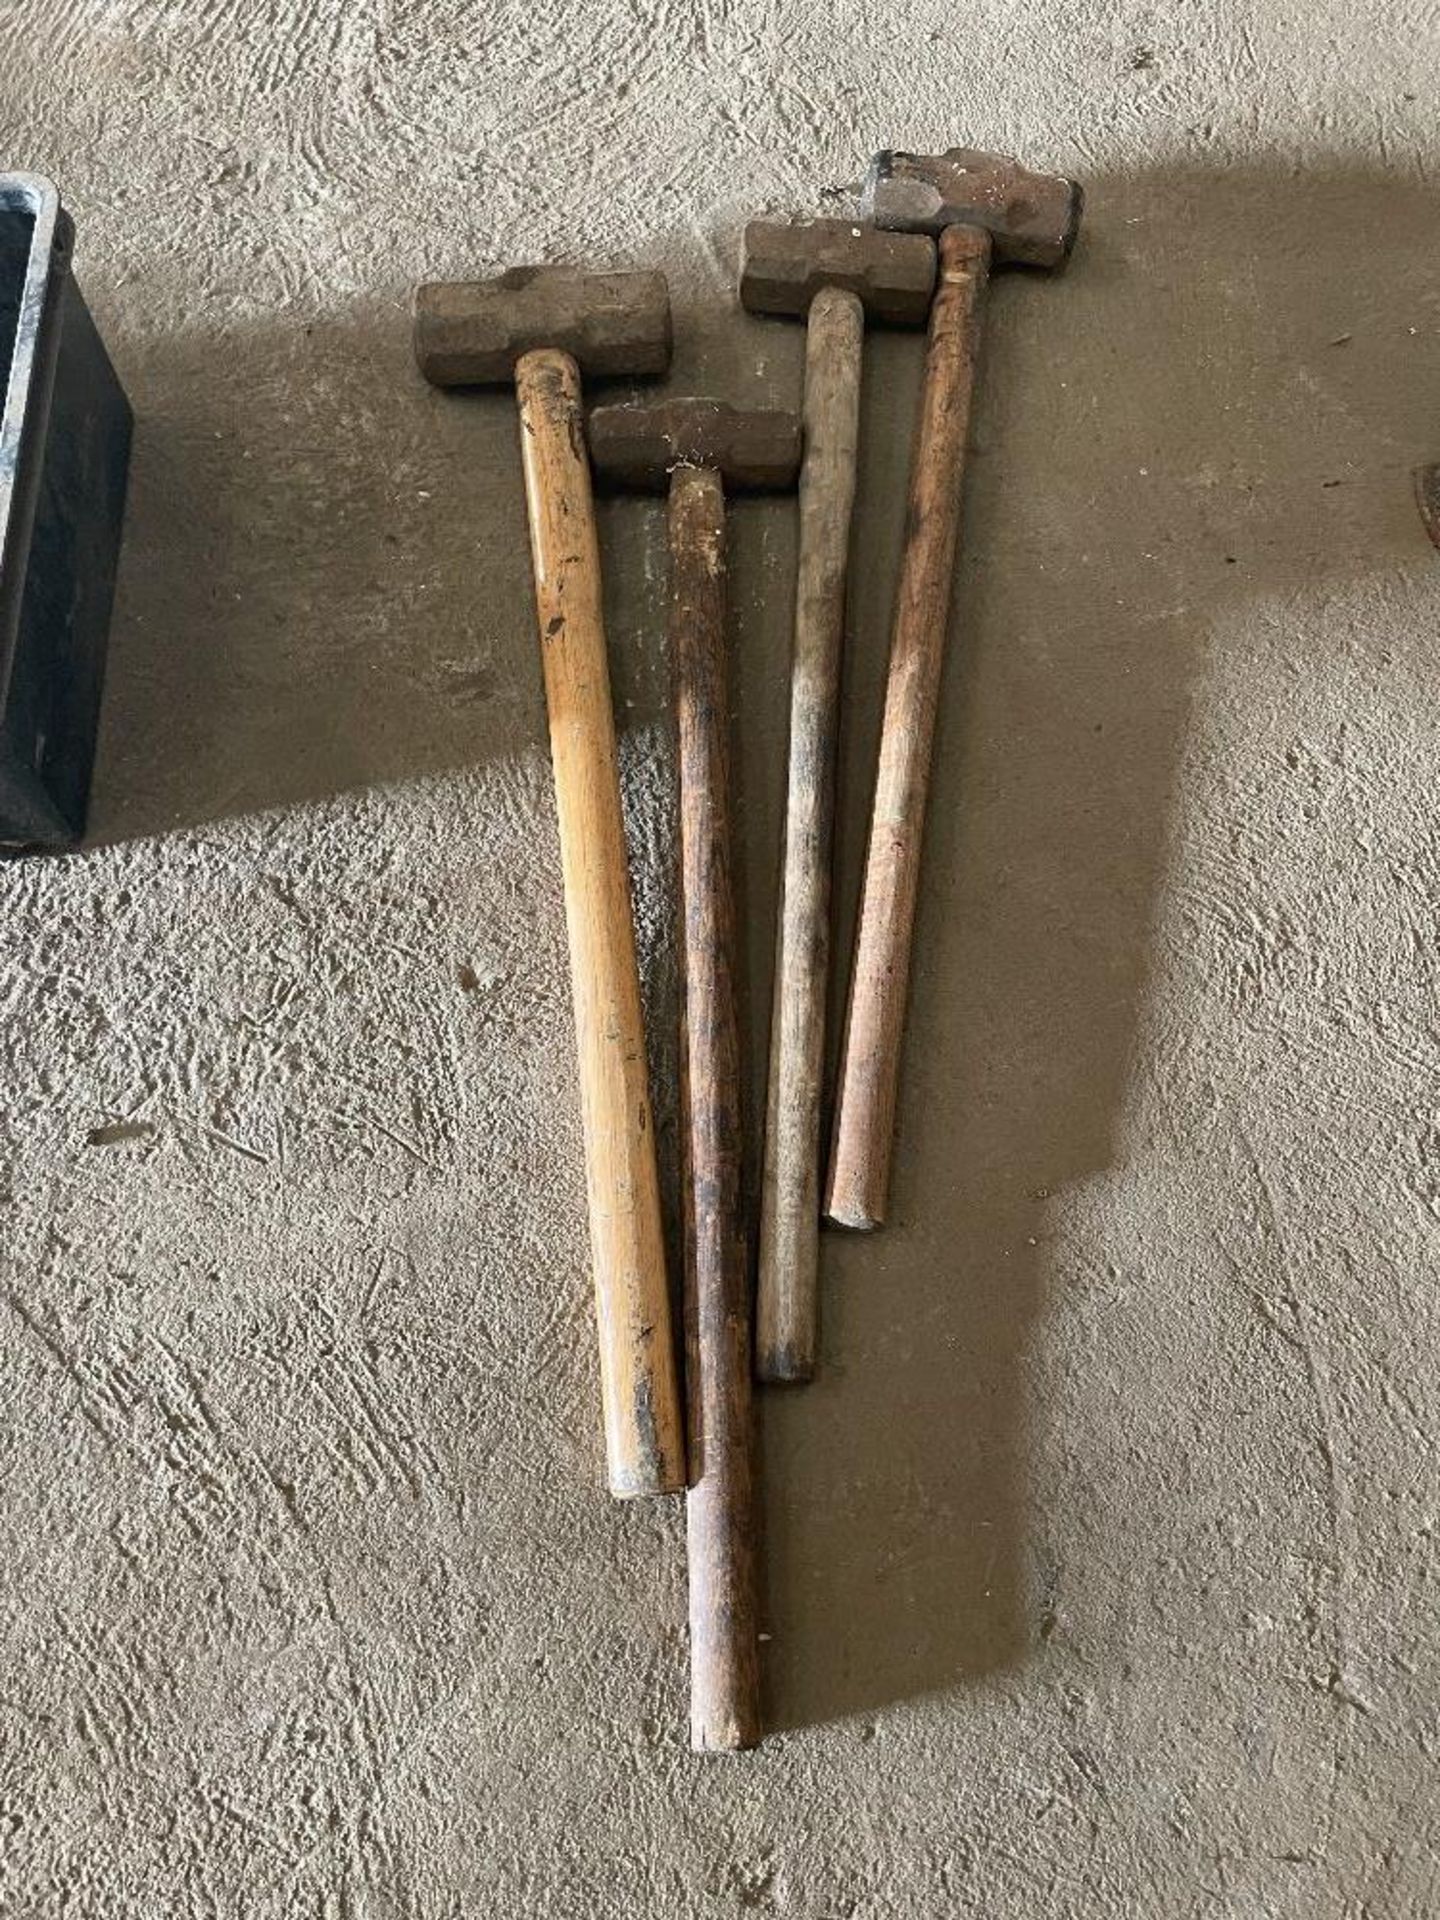 4 x Sledge Hammers